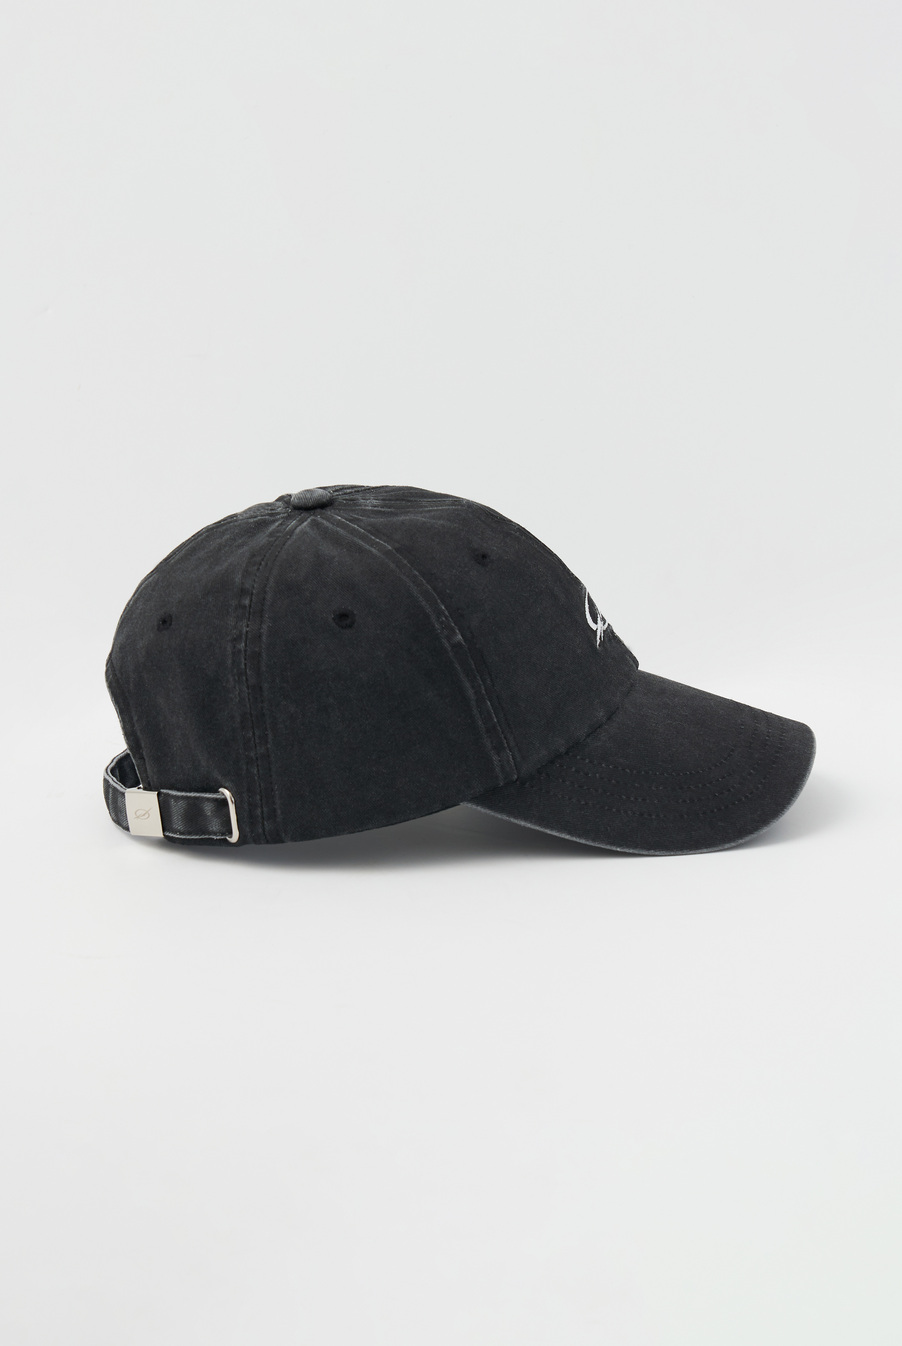 WASHED LOGO CAP - BLACK